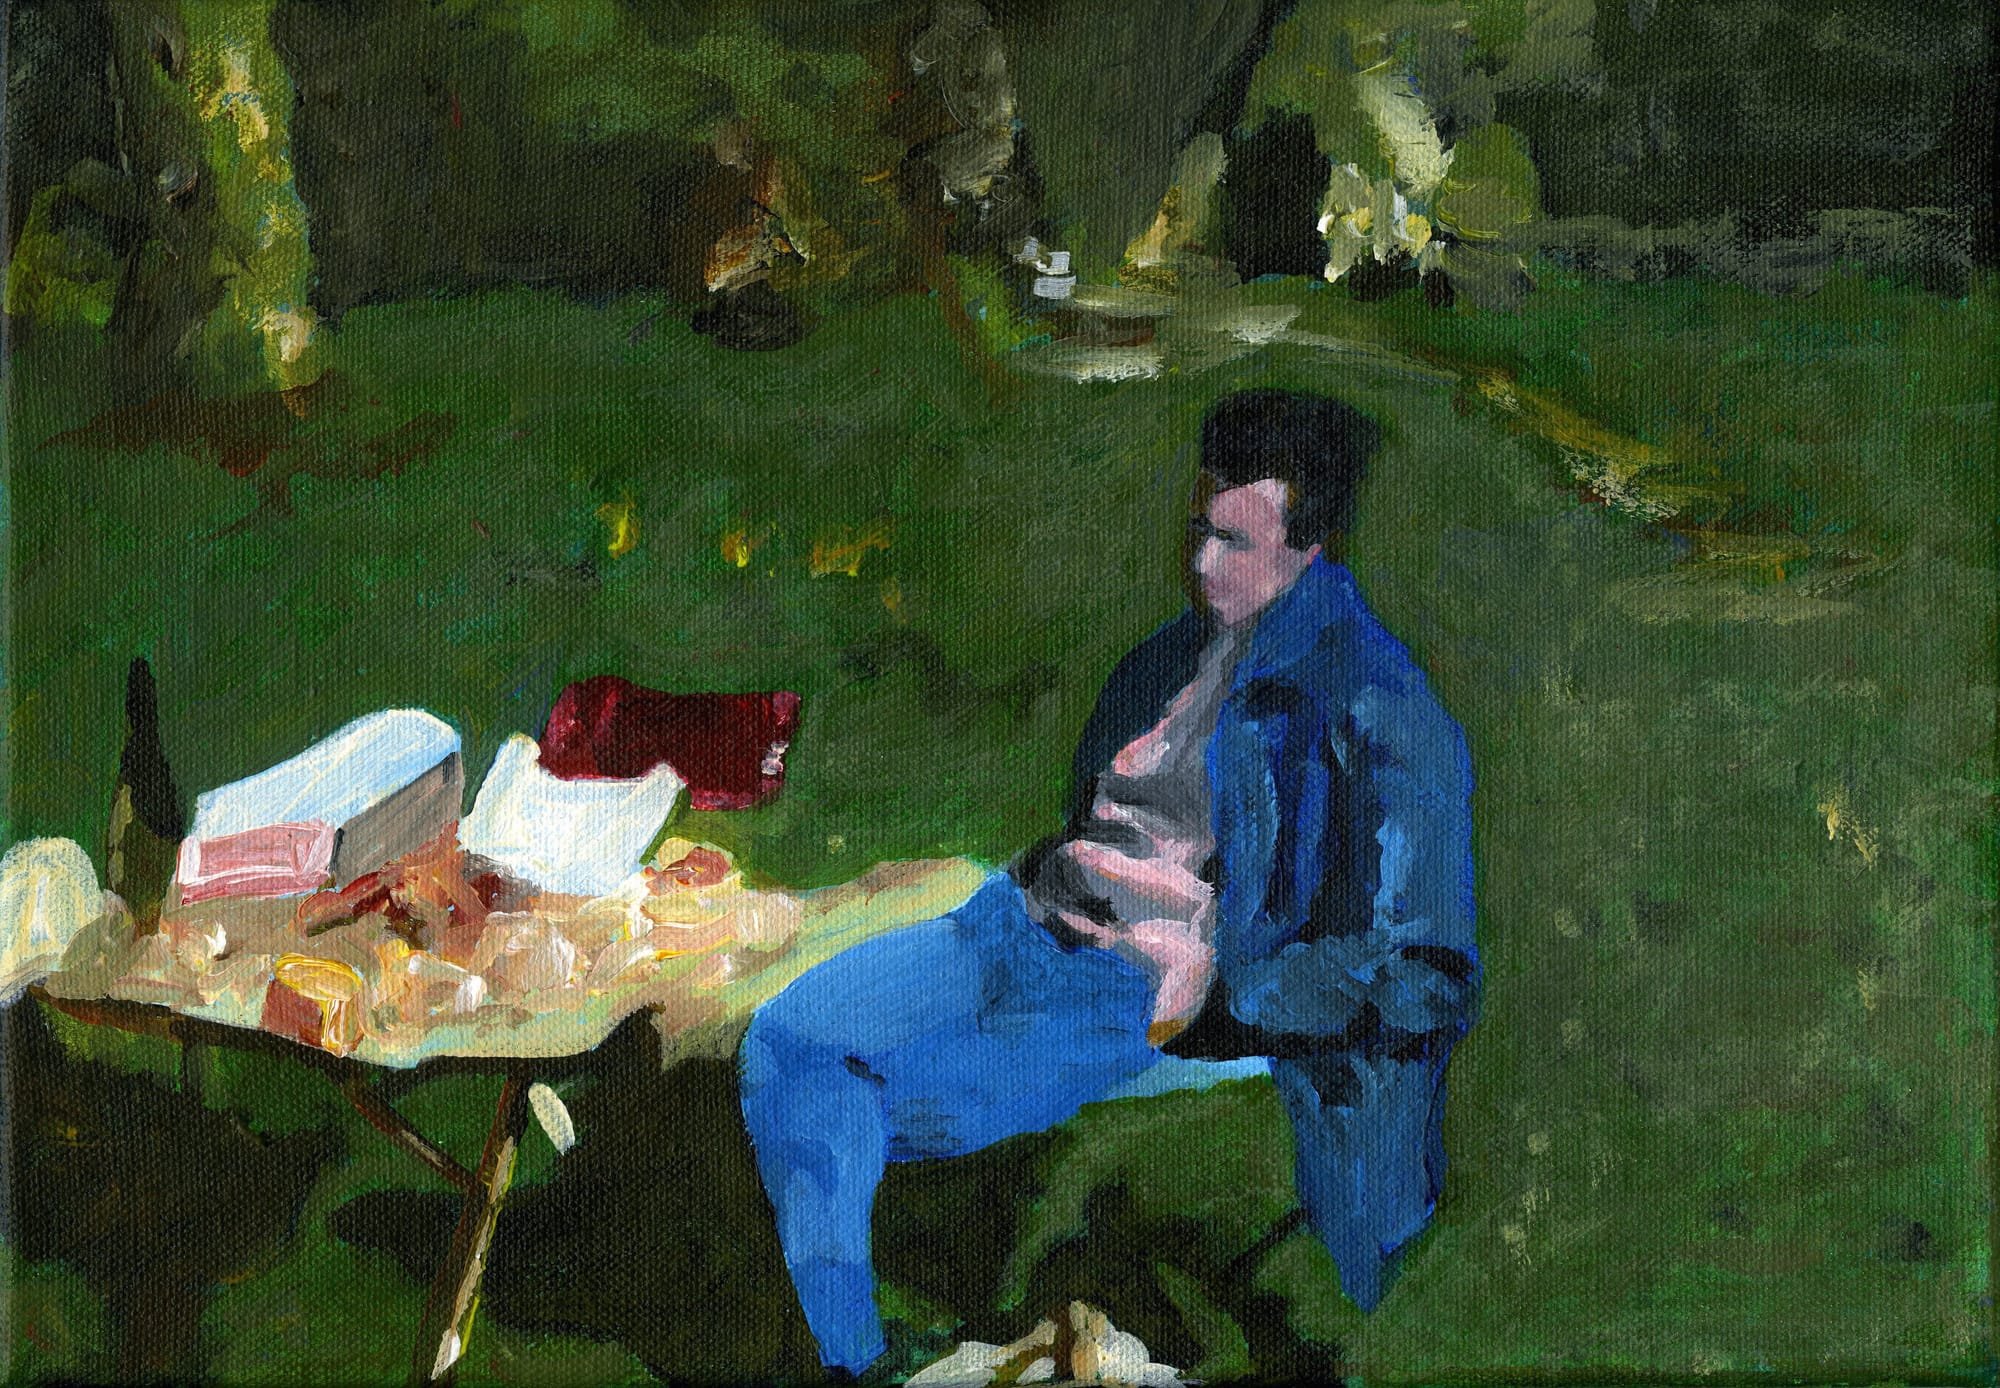 Roger at the picnic